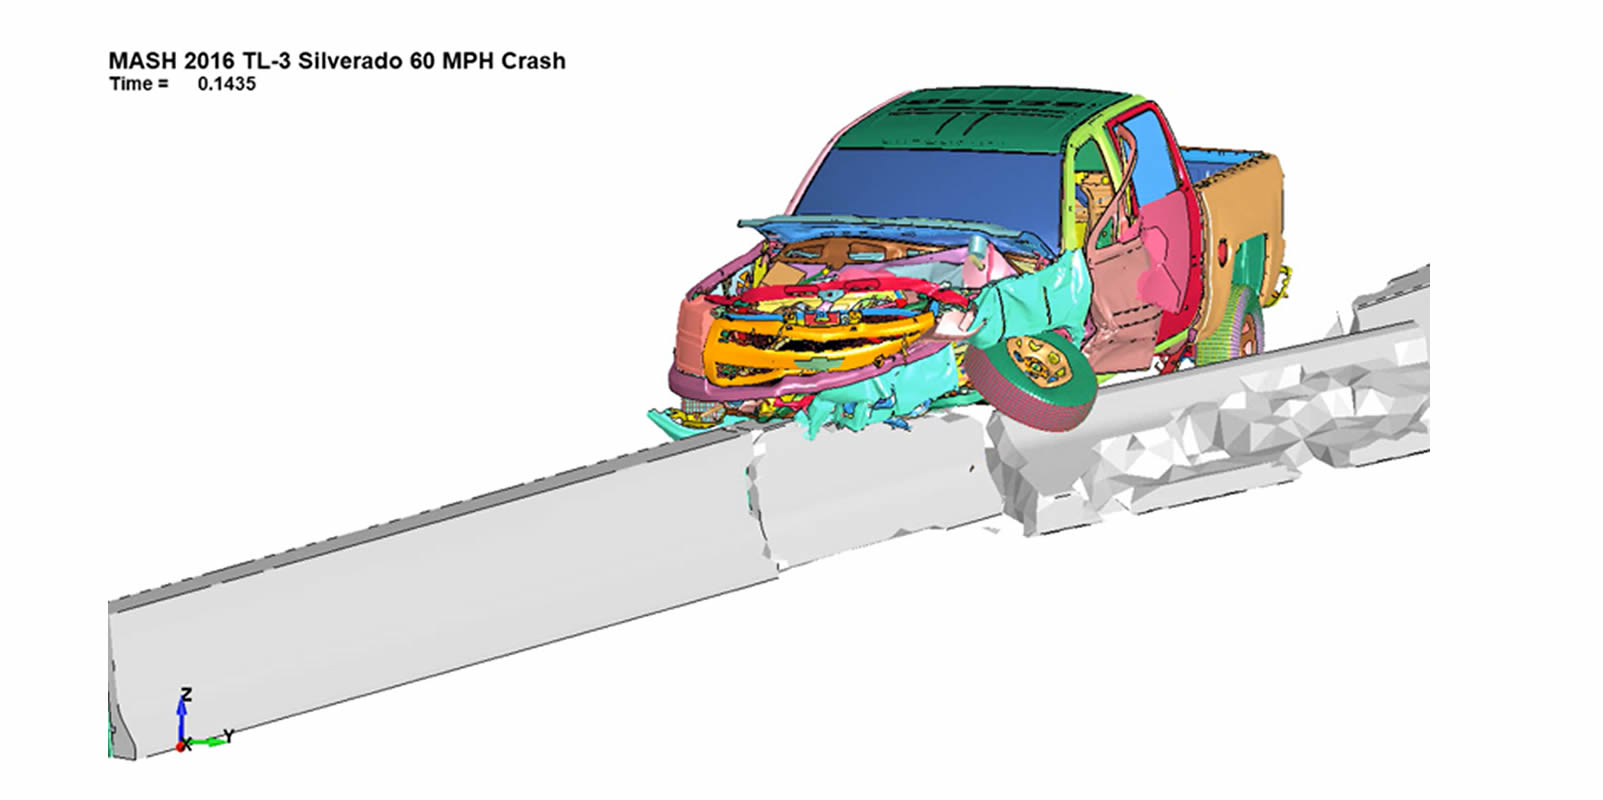 MASH 2016 TL-3 Silverado Crash Simulation into concrete barrier.  Nonlinear FEA consulting experts in transportation crash analysis.